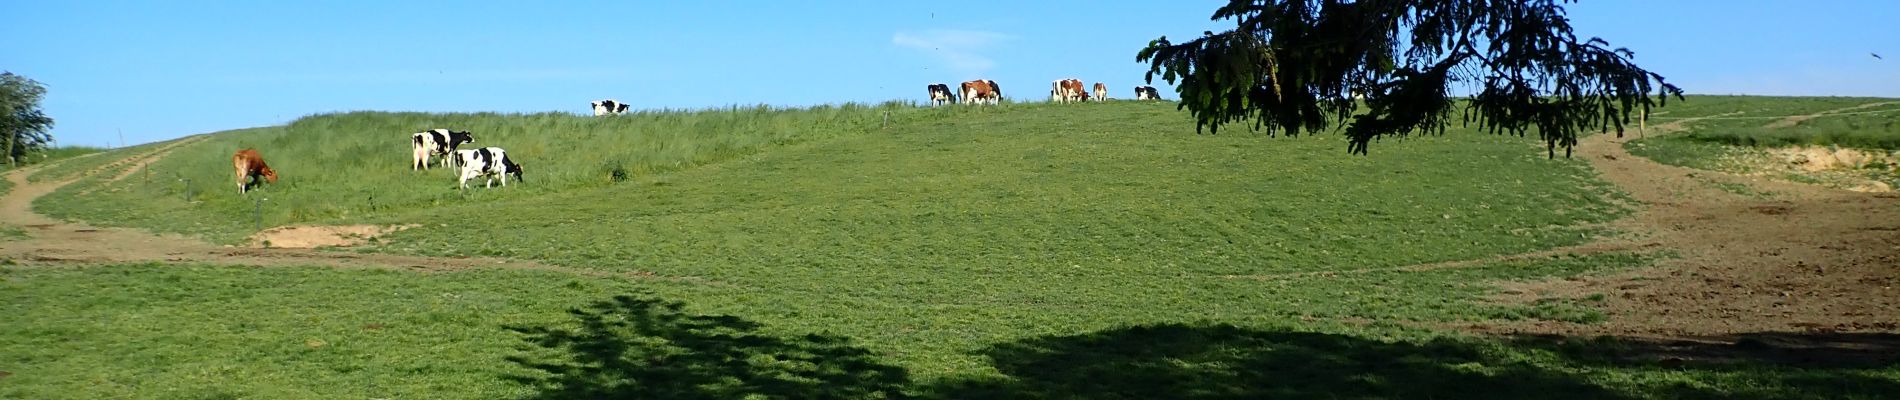 Point of interest Chaumont-Gistoux - Vue nord prairie avec vaches - Photo